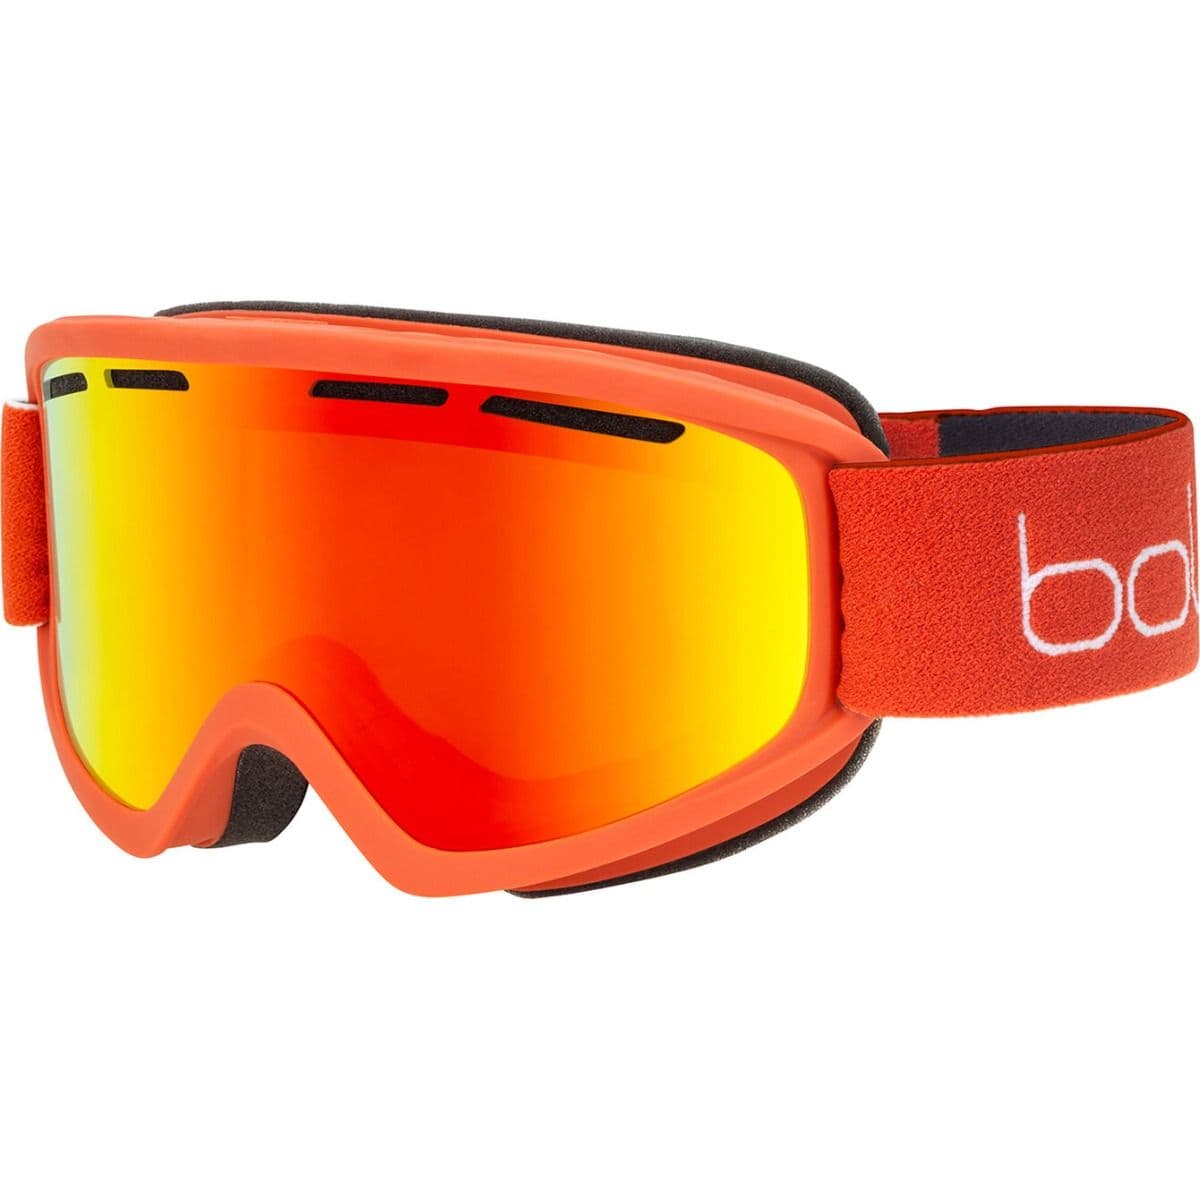 Bolle Freeze Plus Ski Goggles (sale)